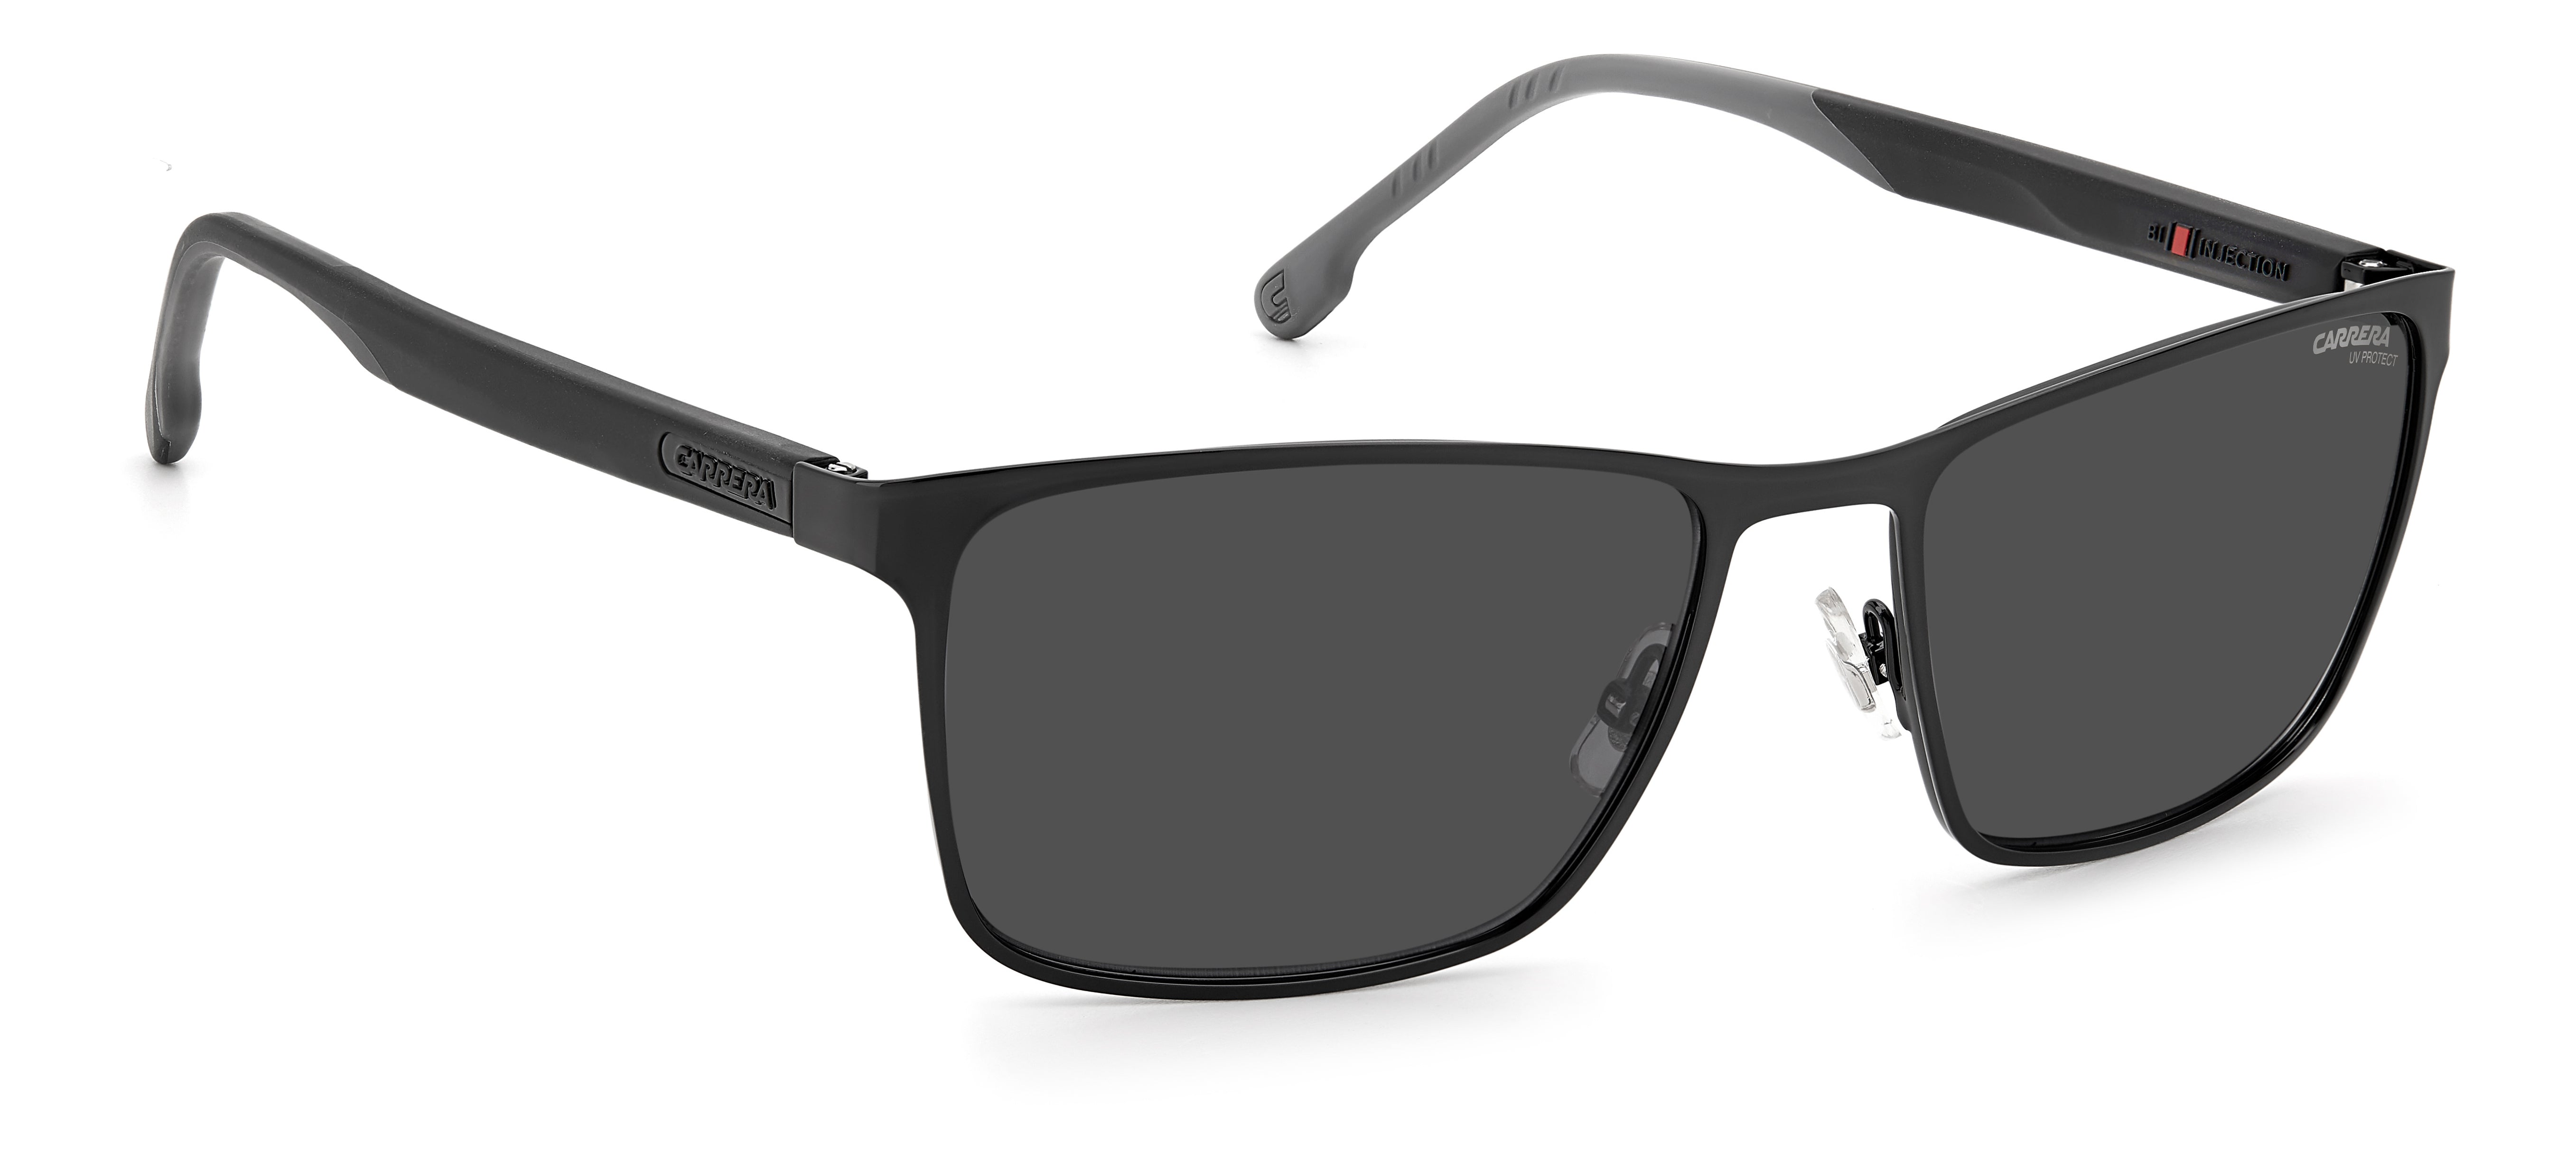 Carrera Metal Rectangular Sunglasses